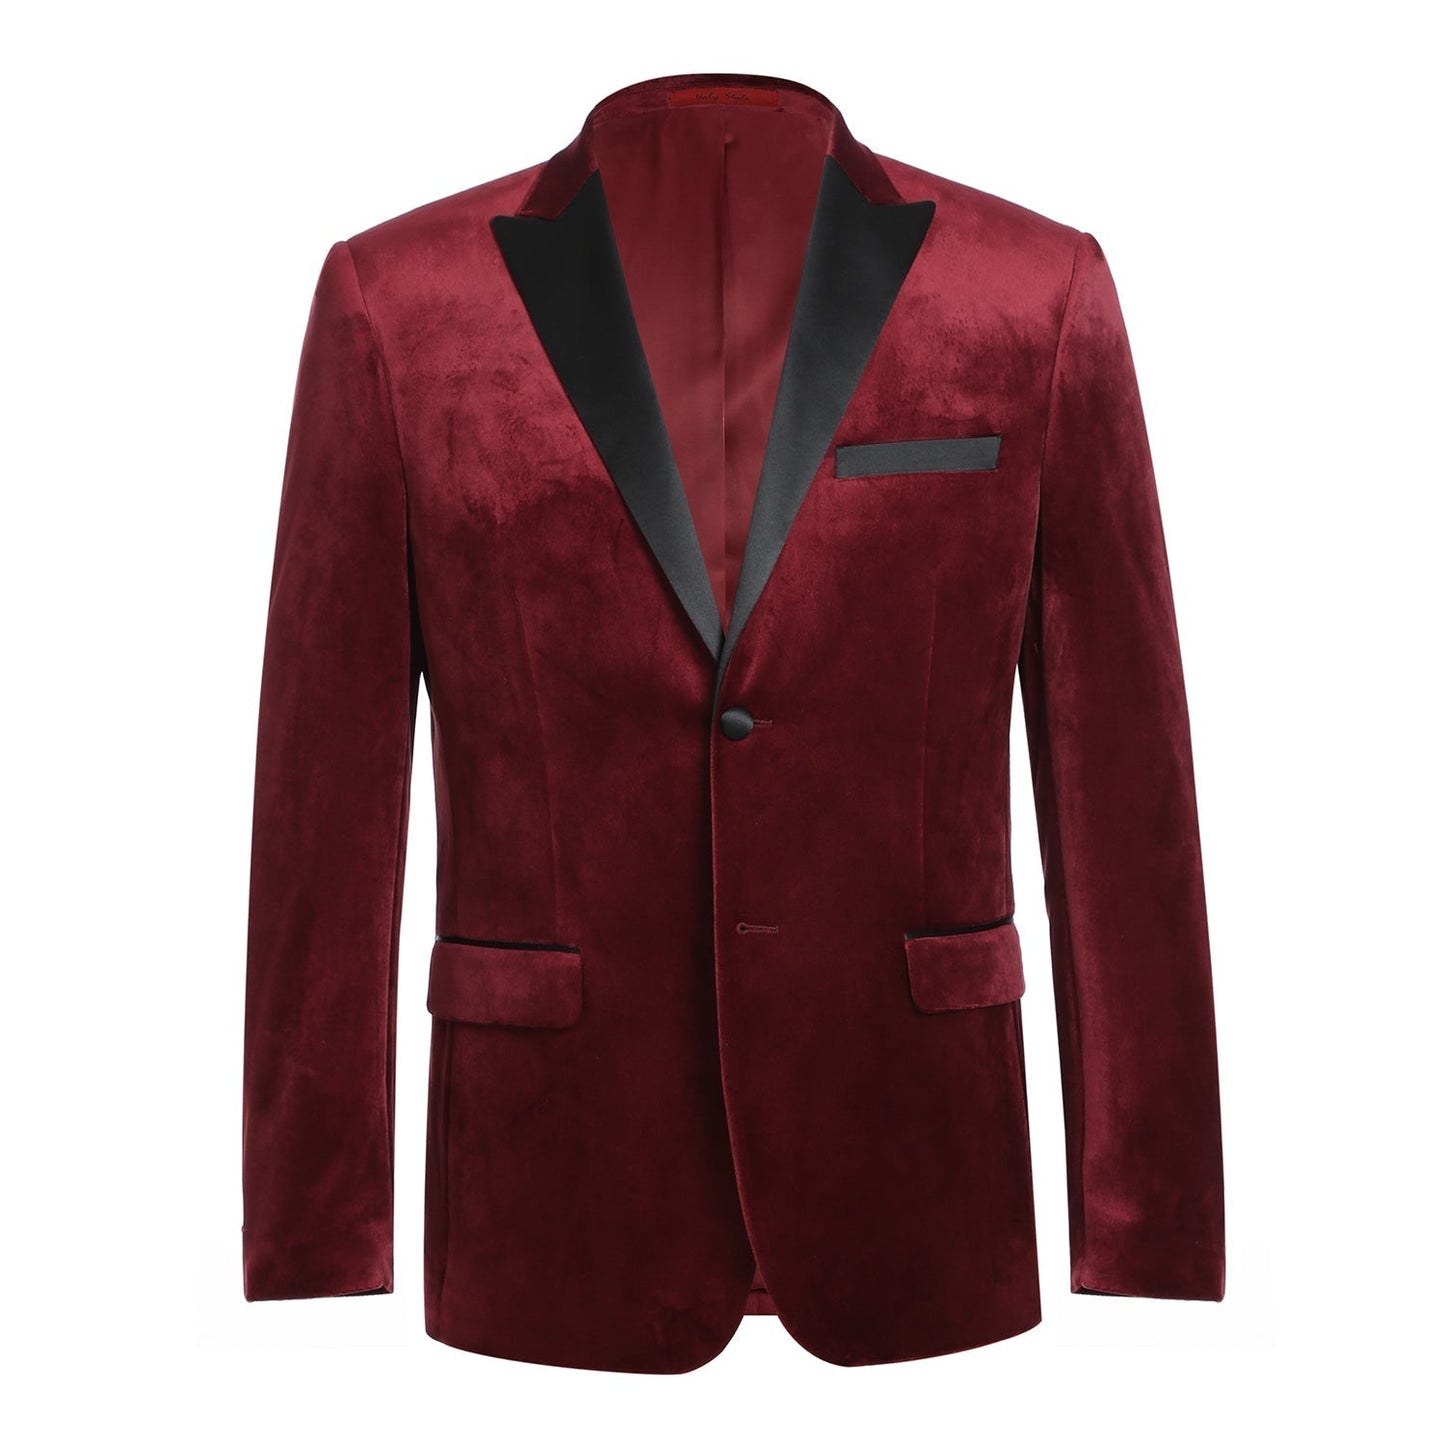 290-8 Men's Slim Fit Red Tuxedo Jacket